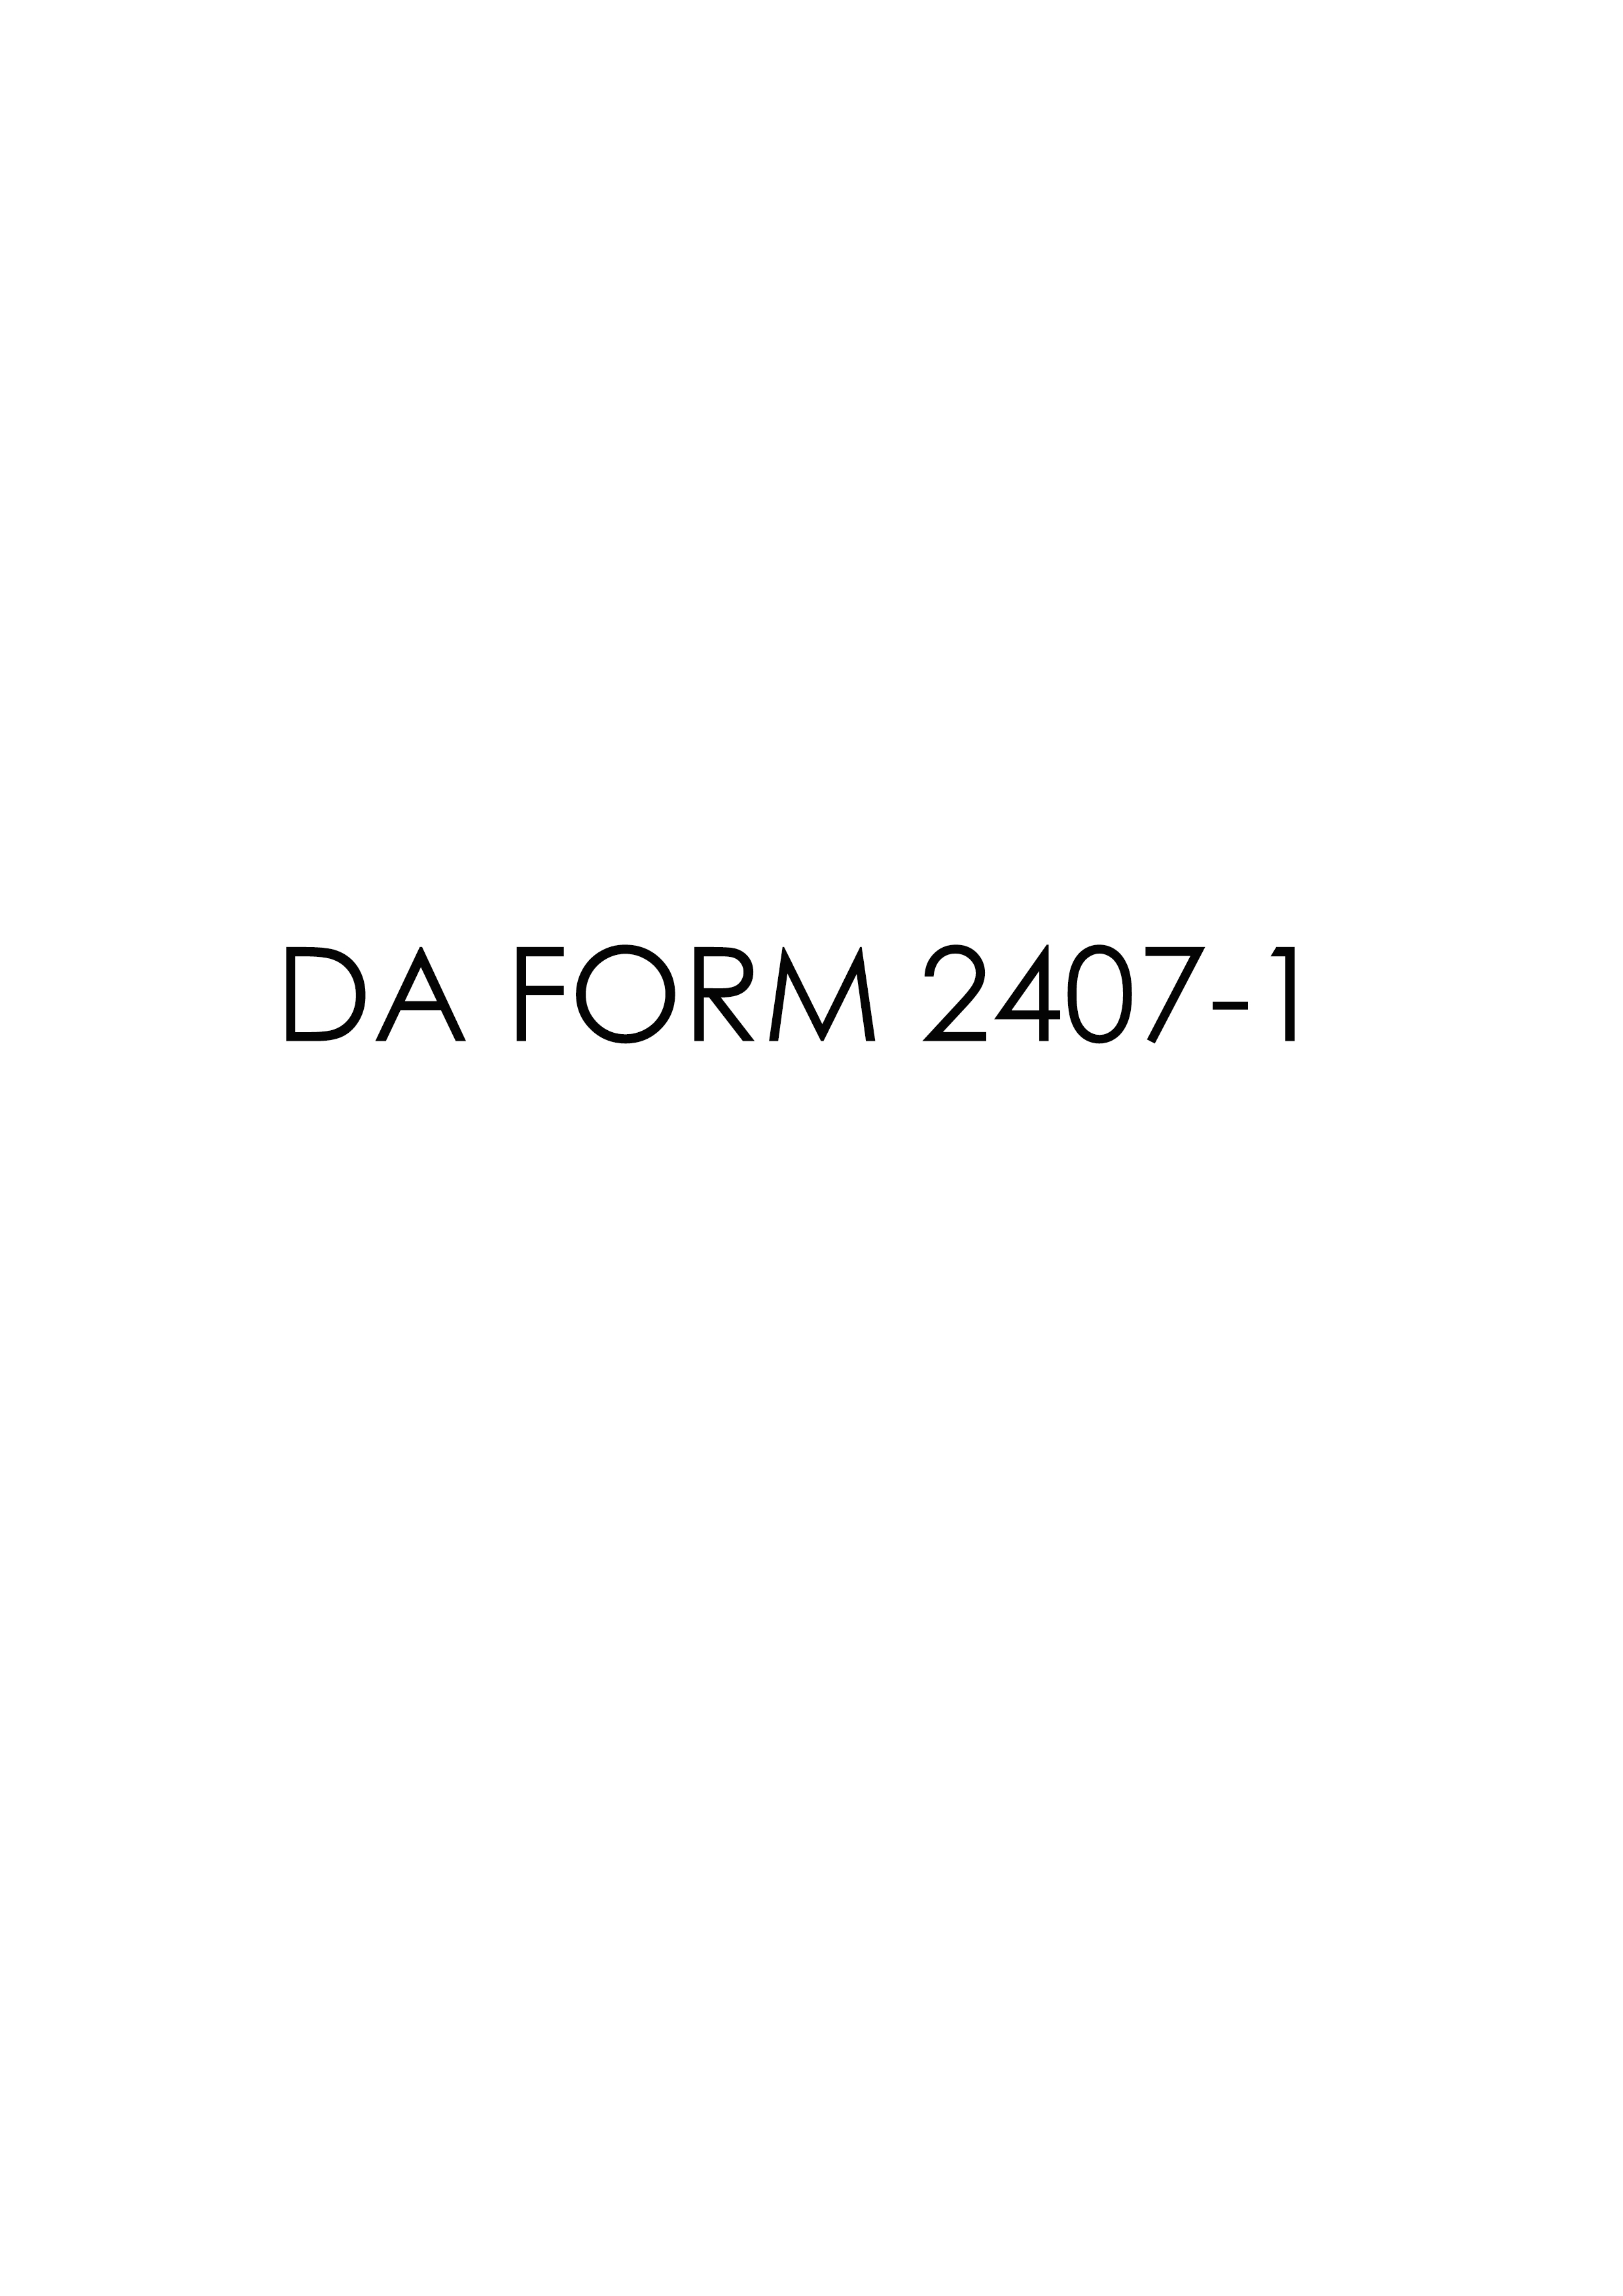 Download da 2407-1 Form